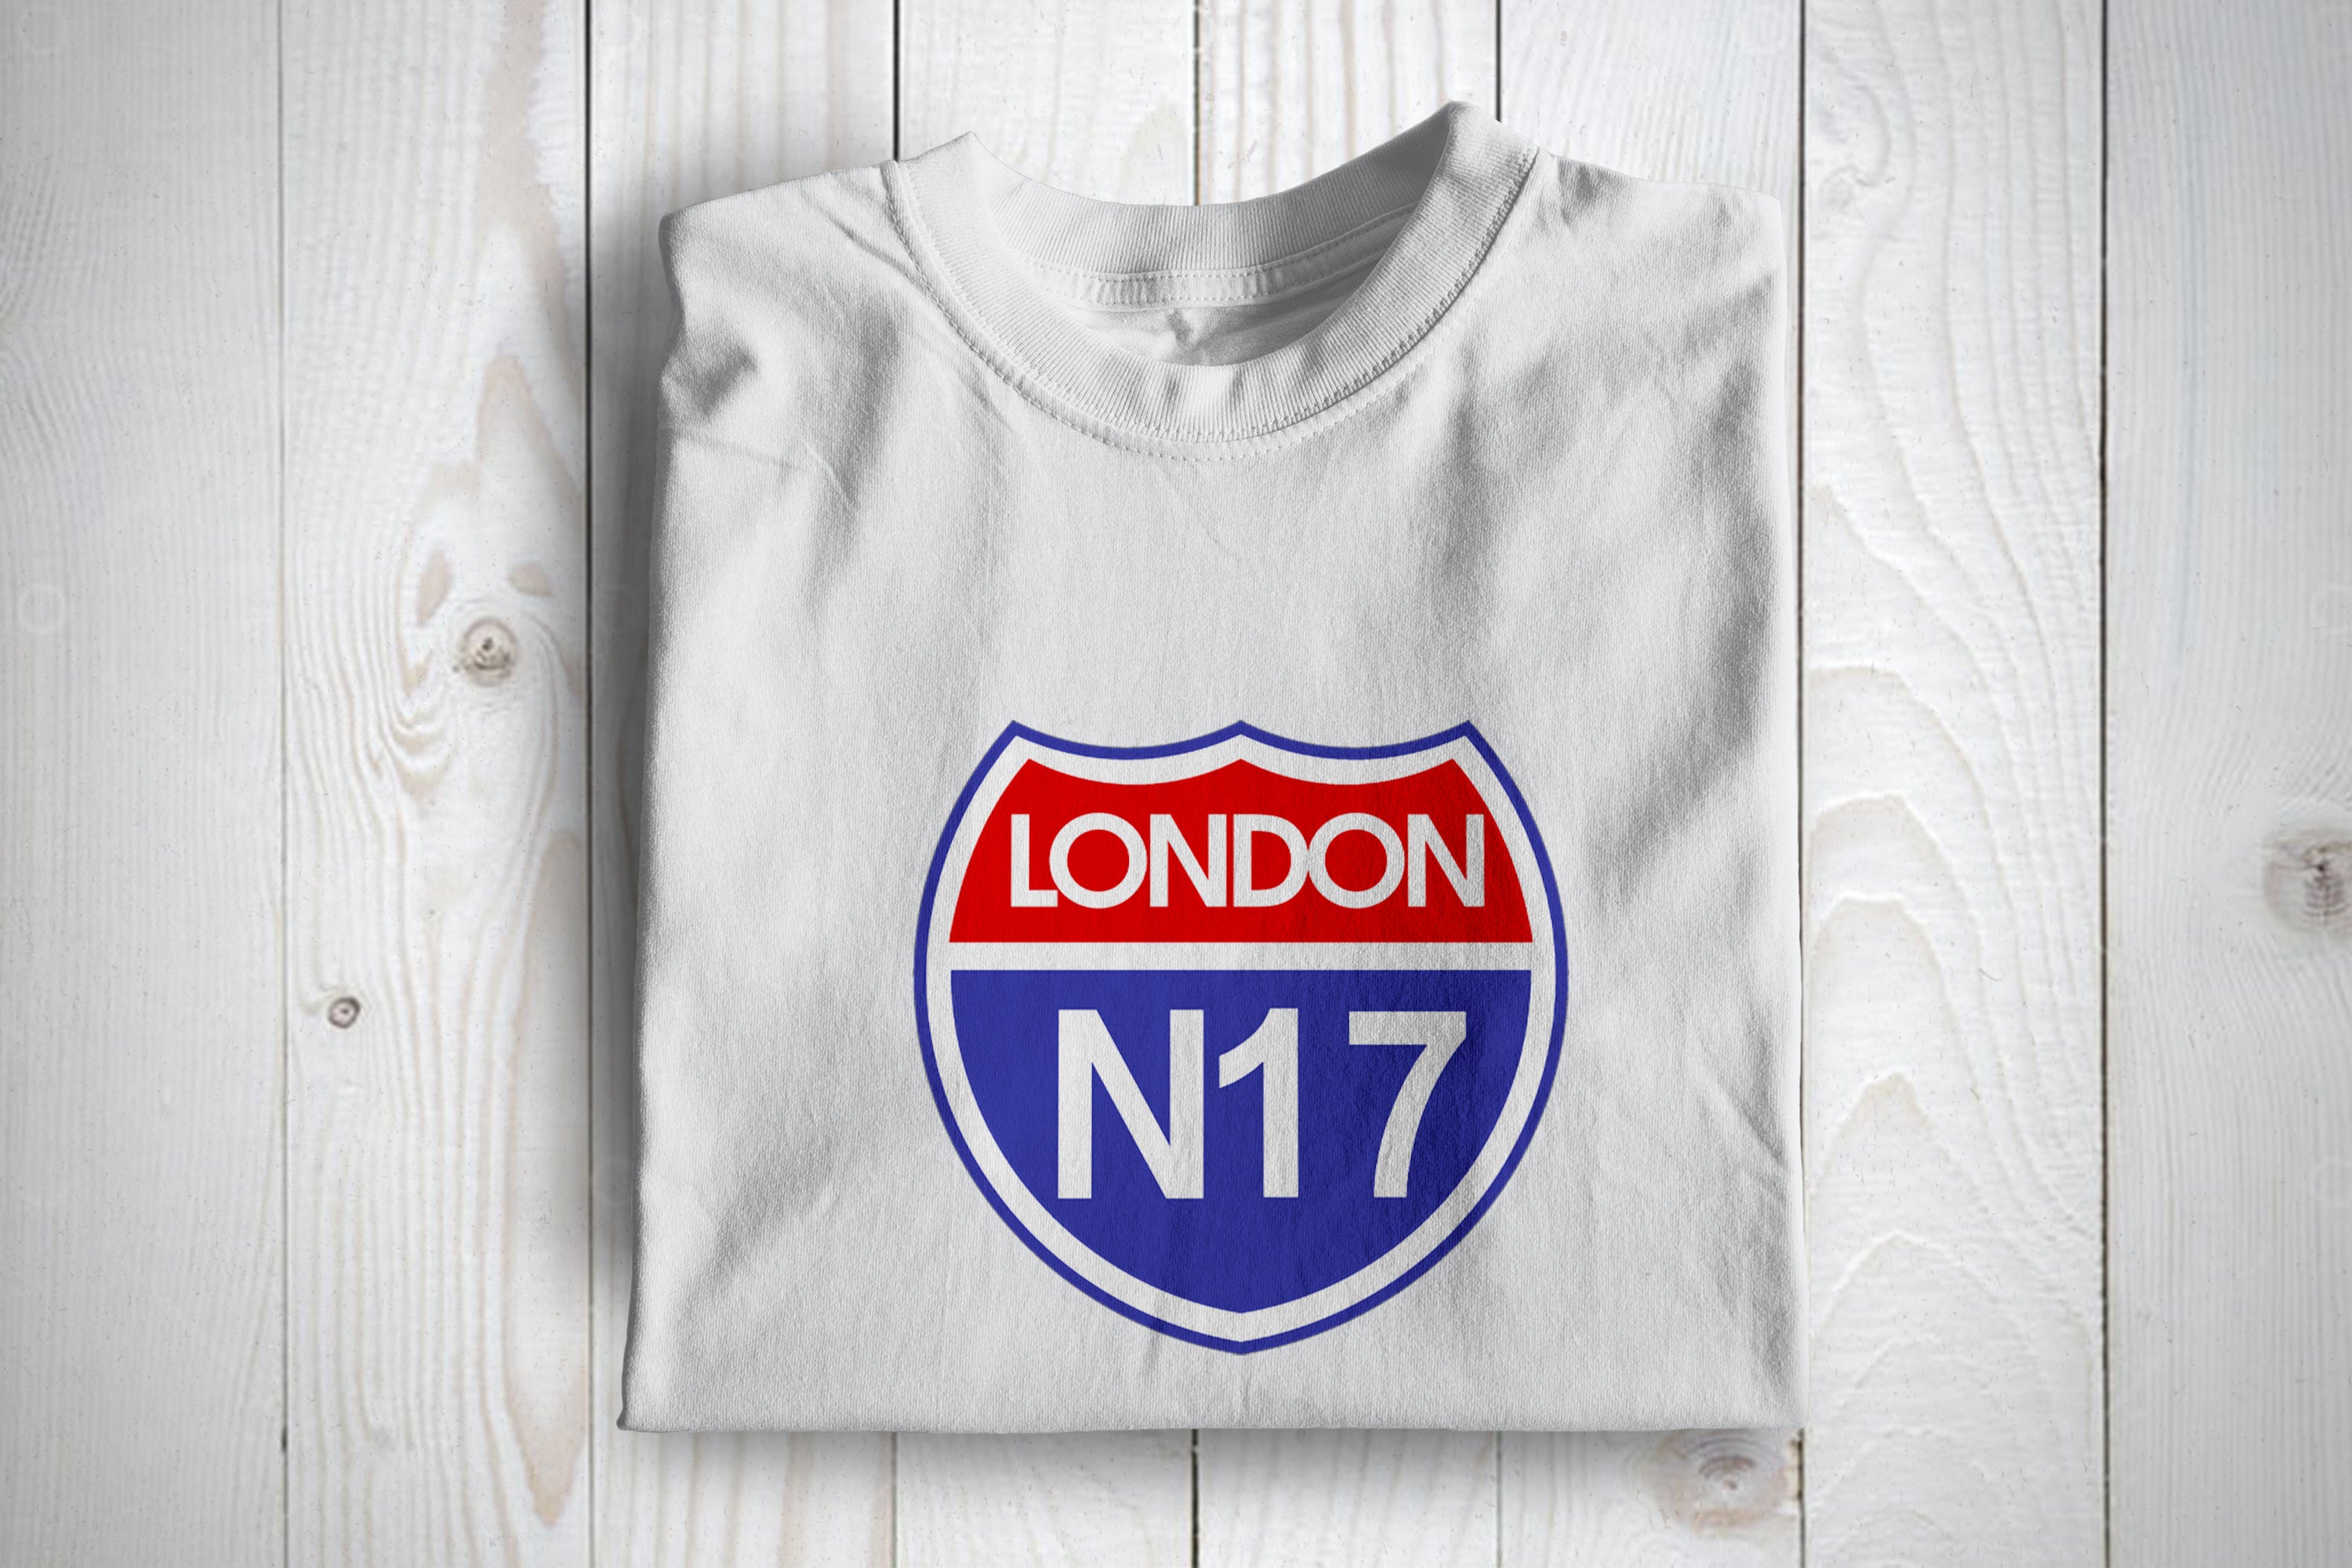 Tottenham N17 Football Casuals 80s Dressers Subculture T Shirt